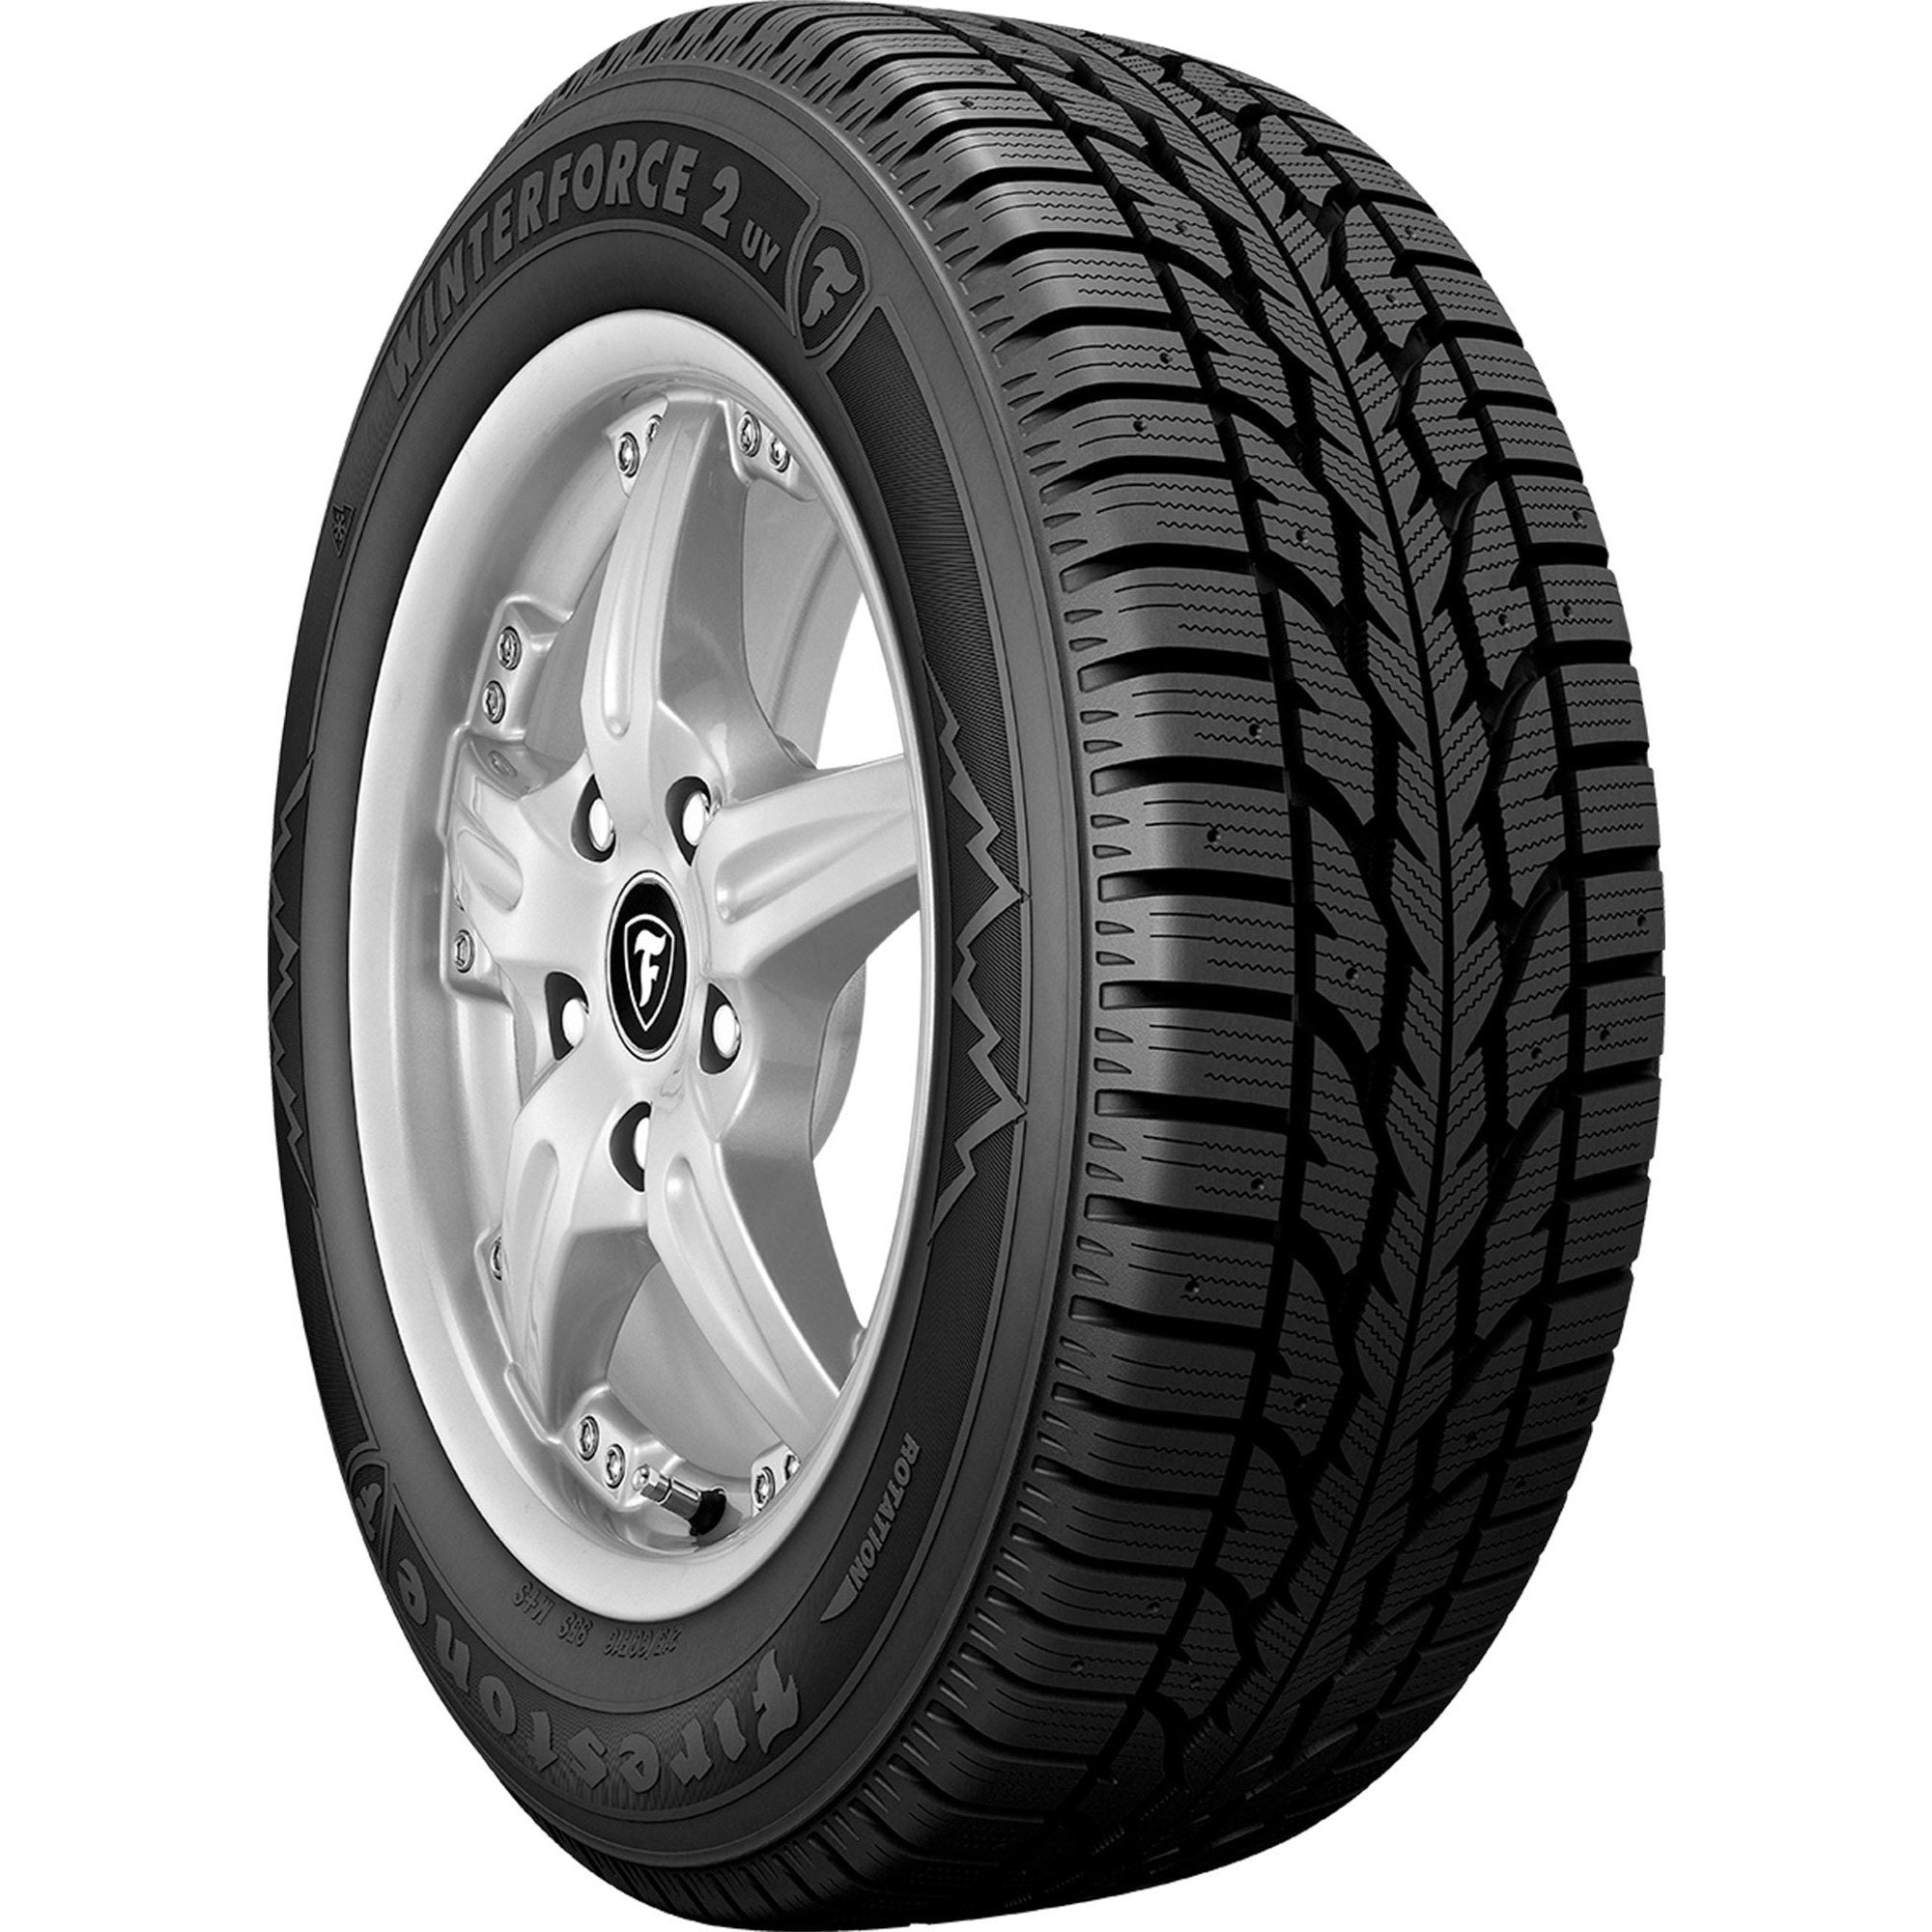 FIRESTONE WINTERFORCE2 UV P245/70R17 (30.6X9.7R 17) Tires